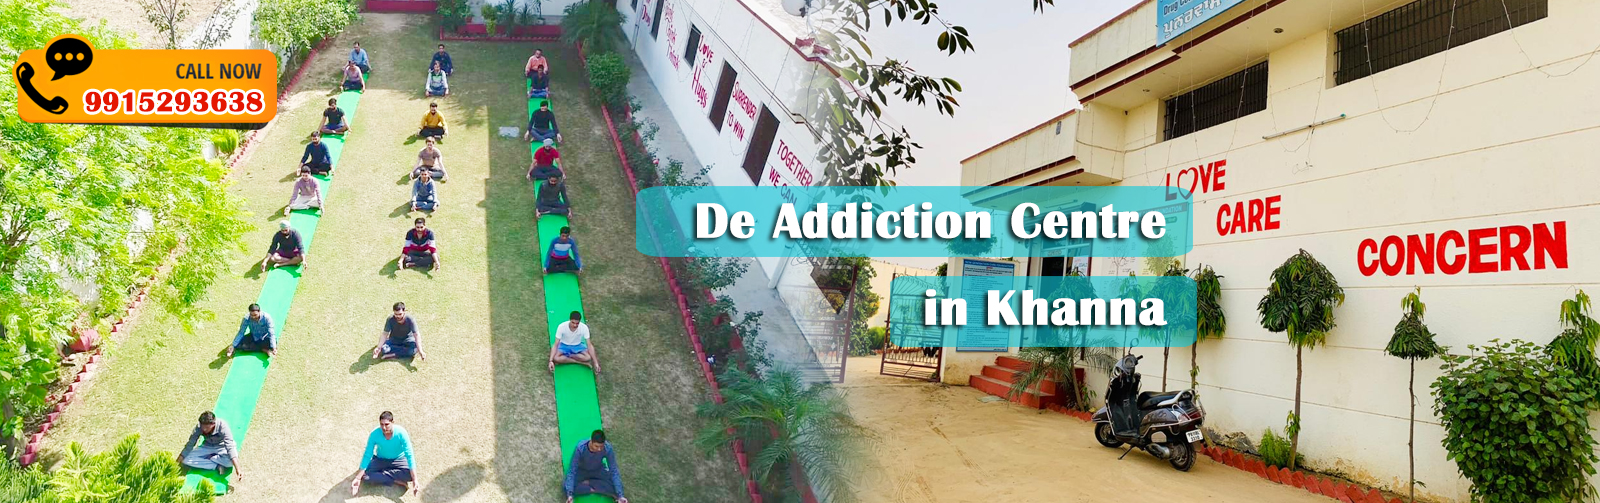 De Addiction Centre in Khanna